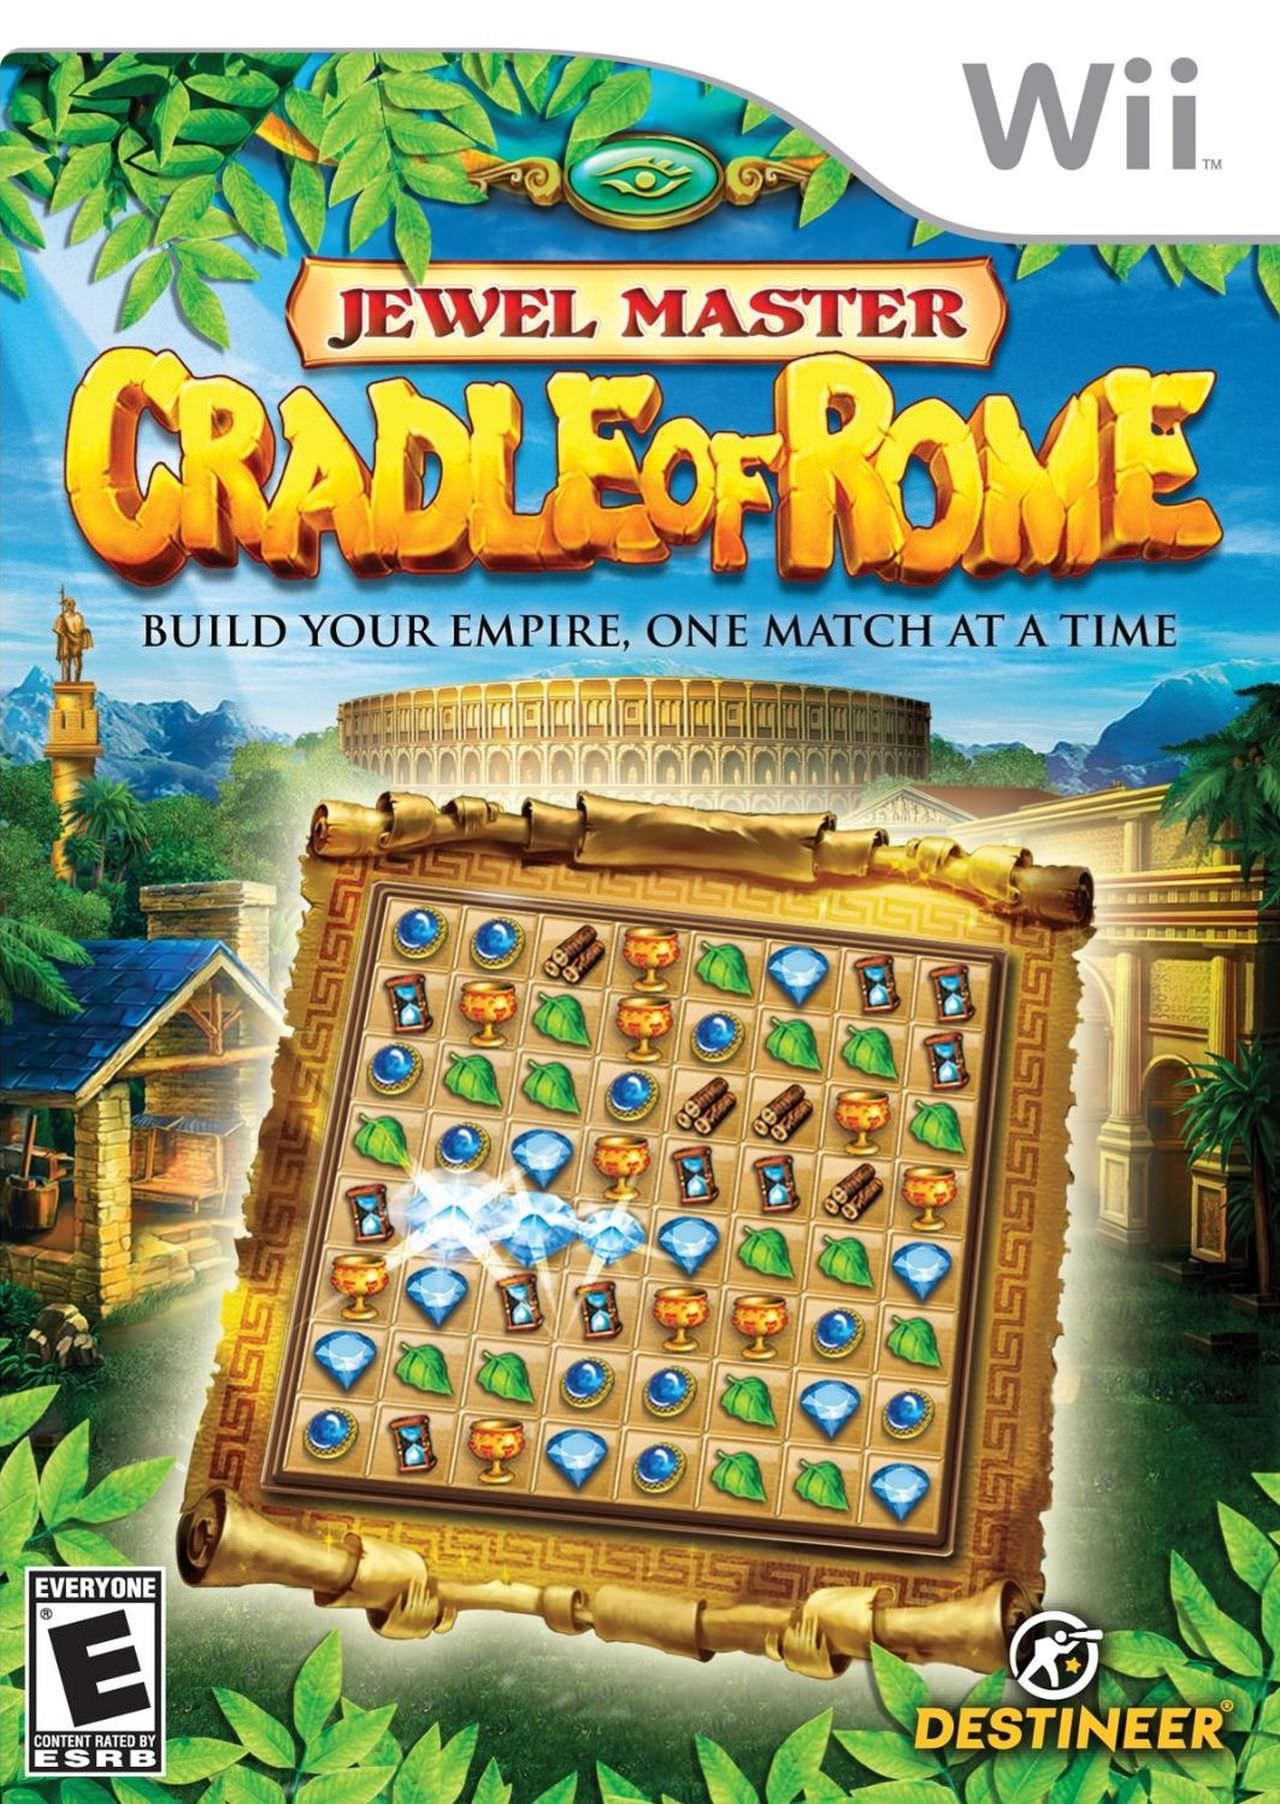 Jewel Master - Cradle Of Rome